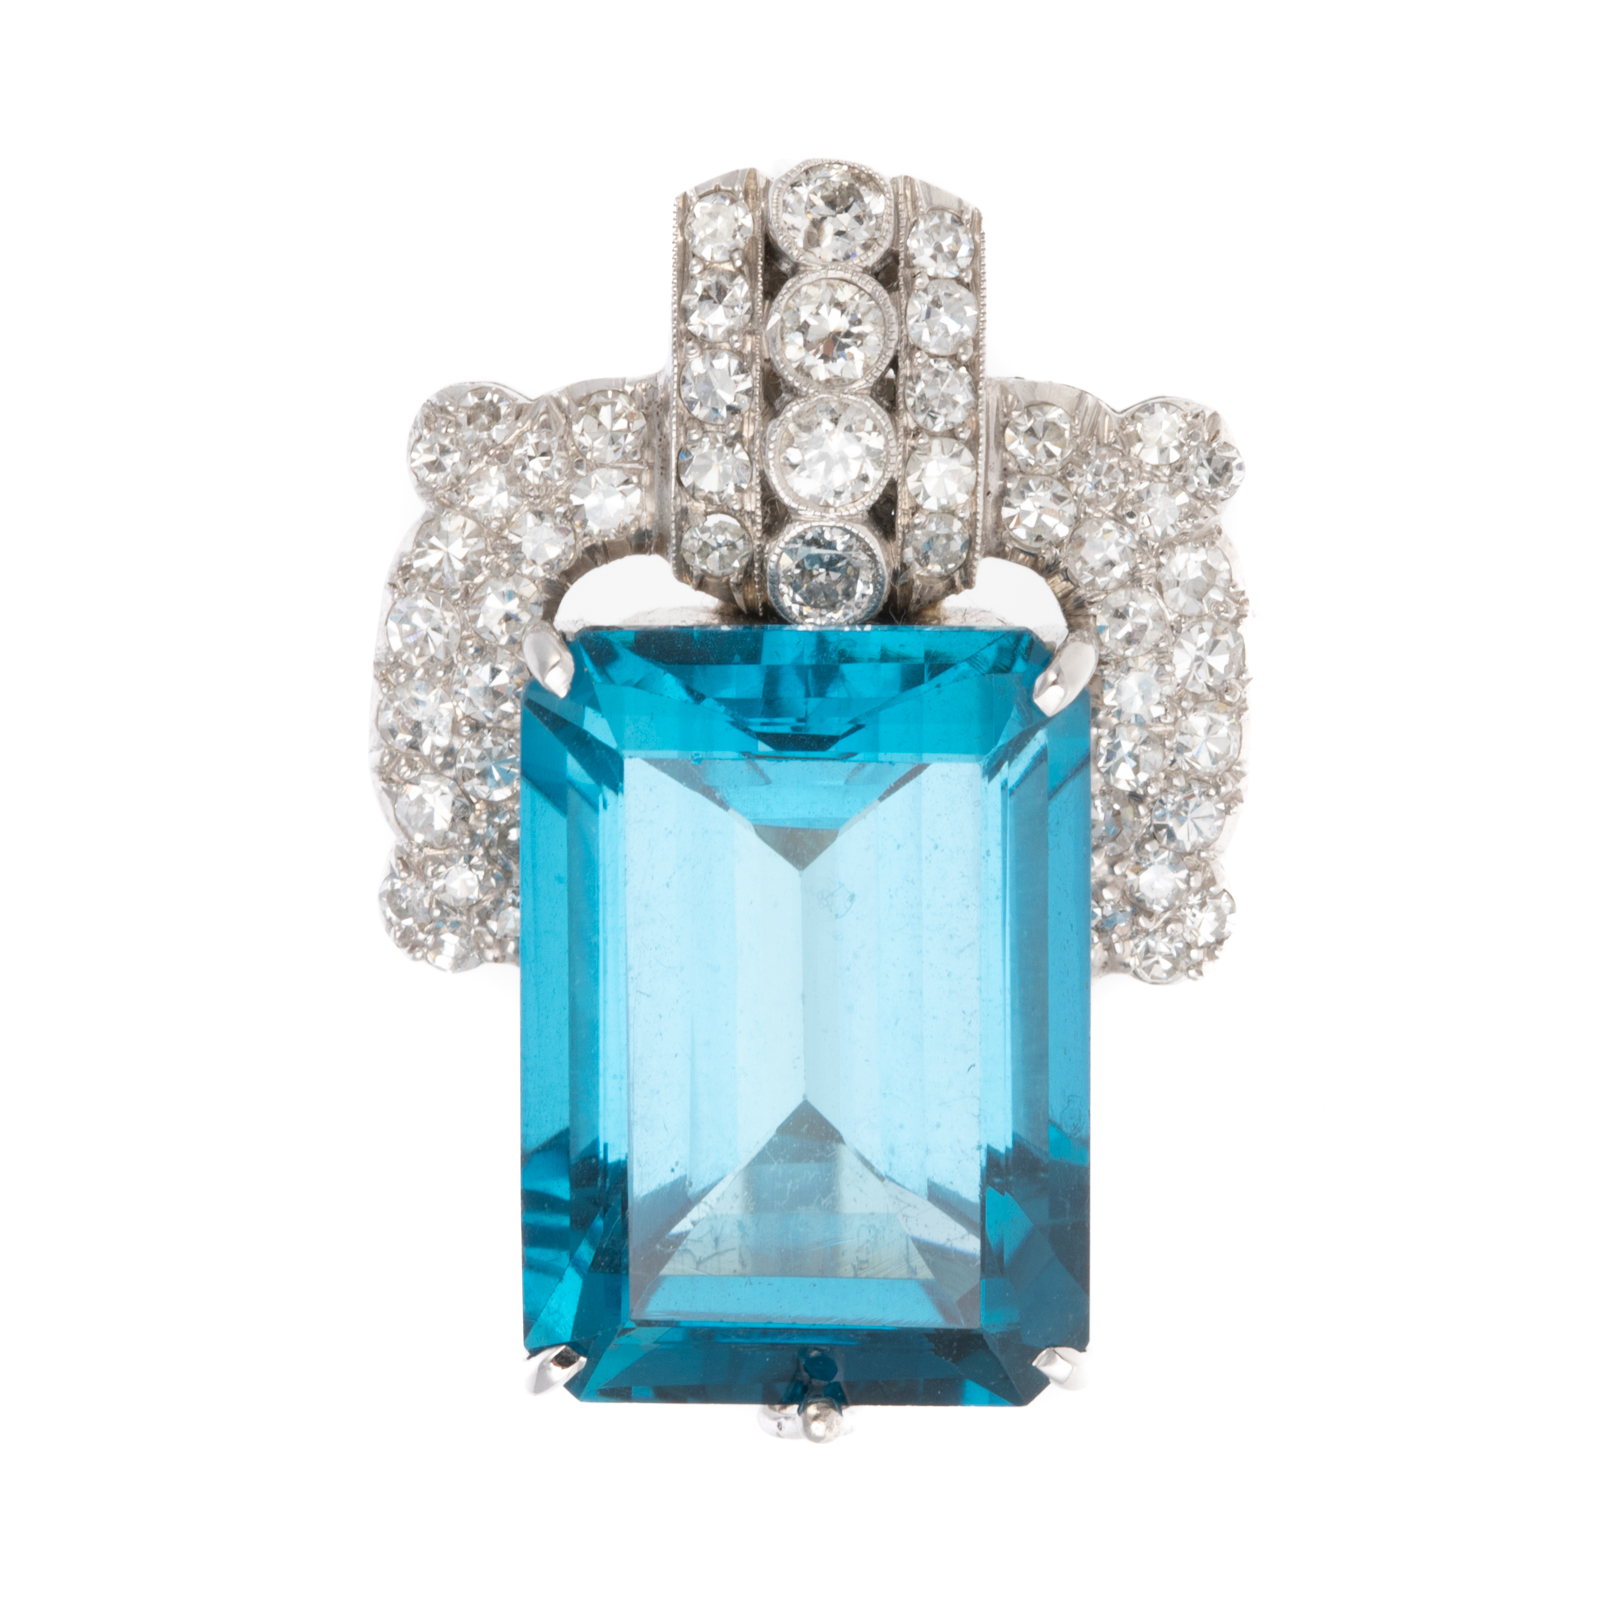 A BLUE TOPAZ ANTIQUE DIAMOND 338d8f